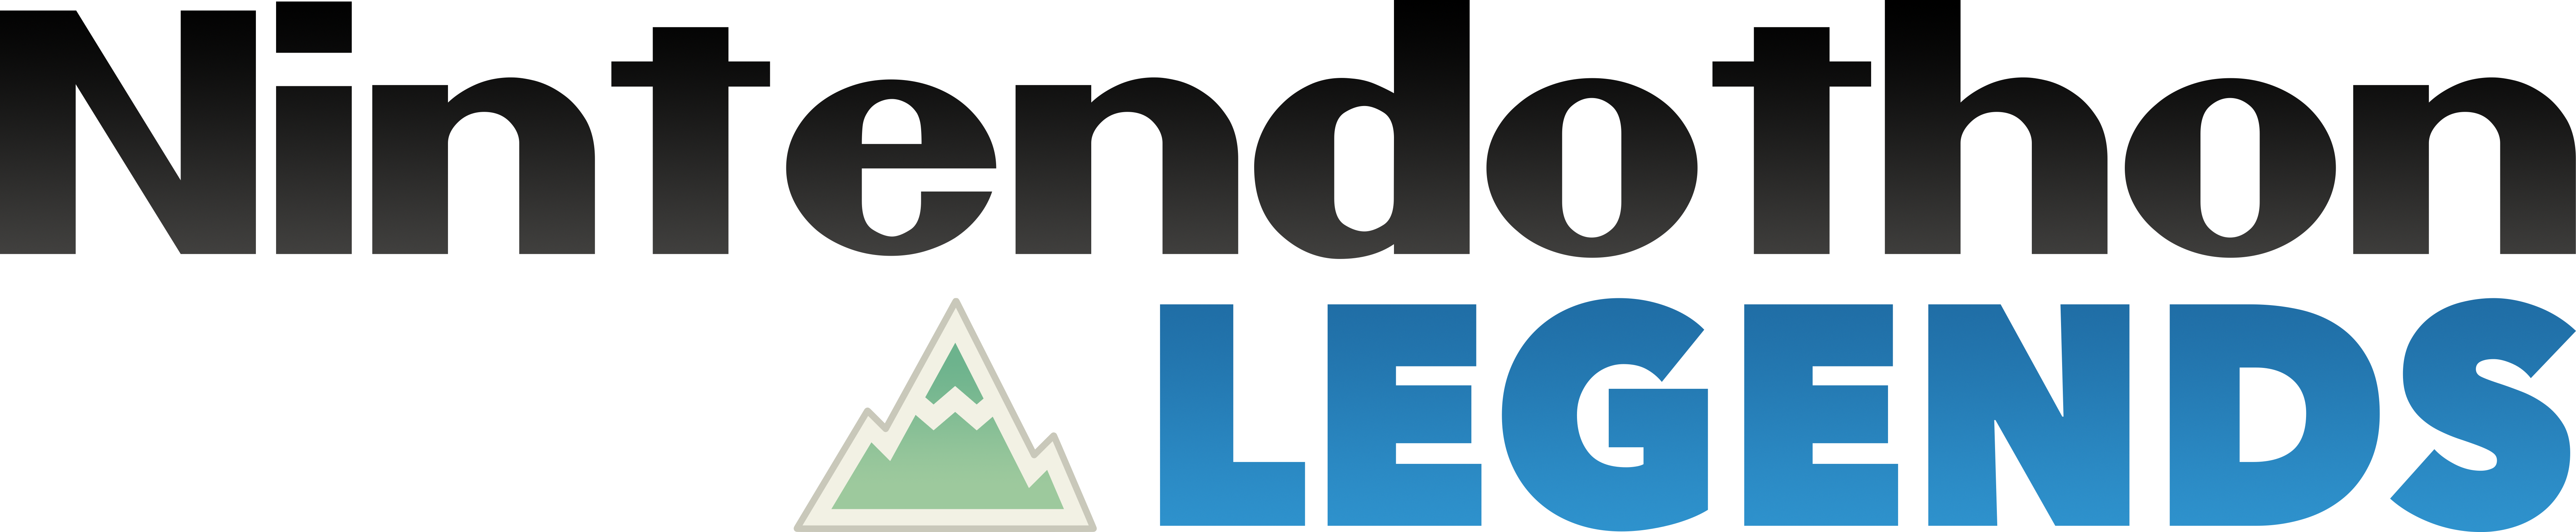 Nintendothon Legends – A Legendary Event!